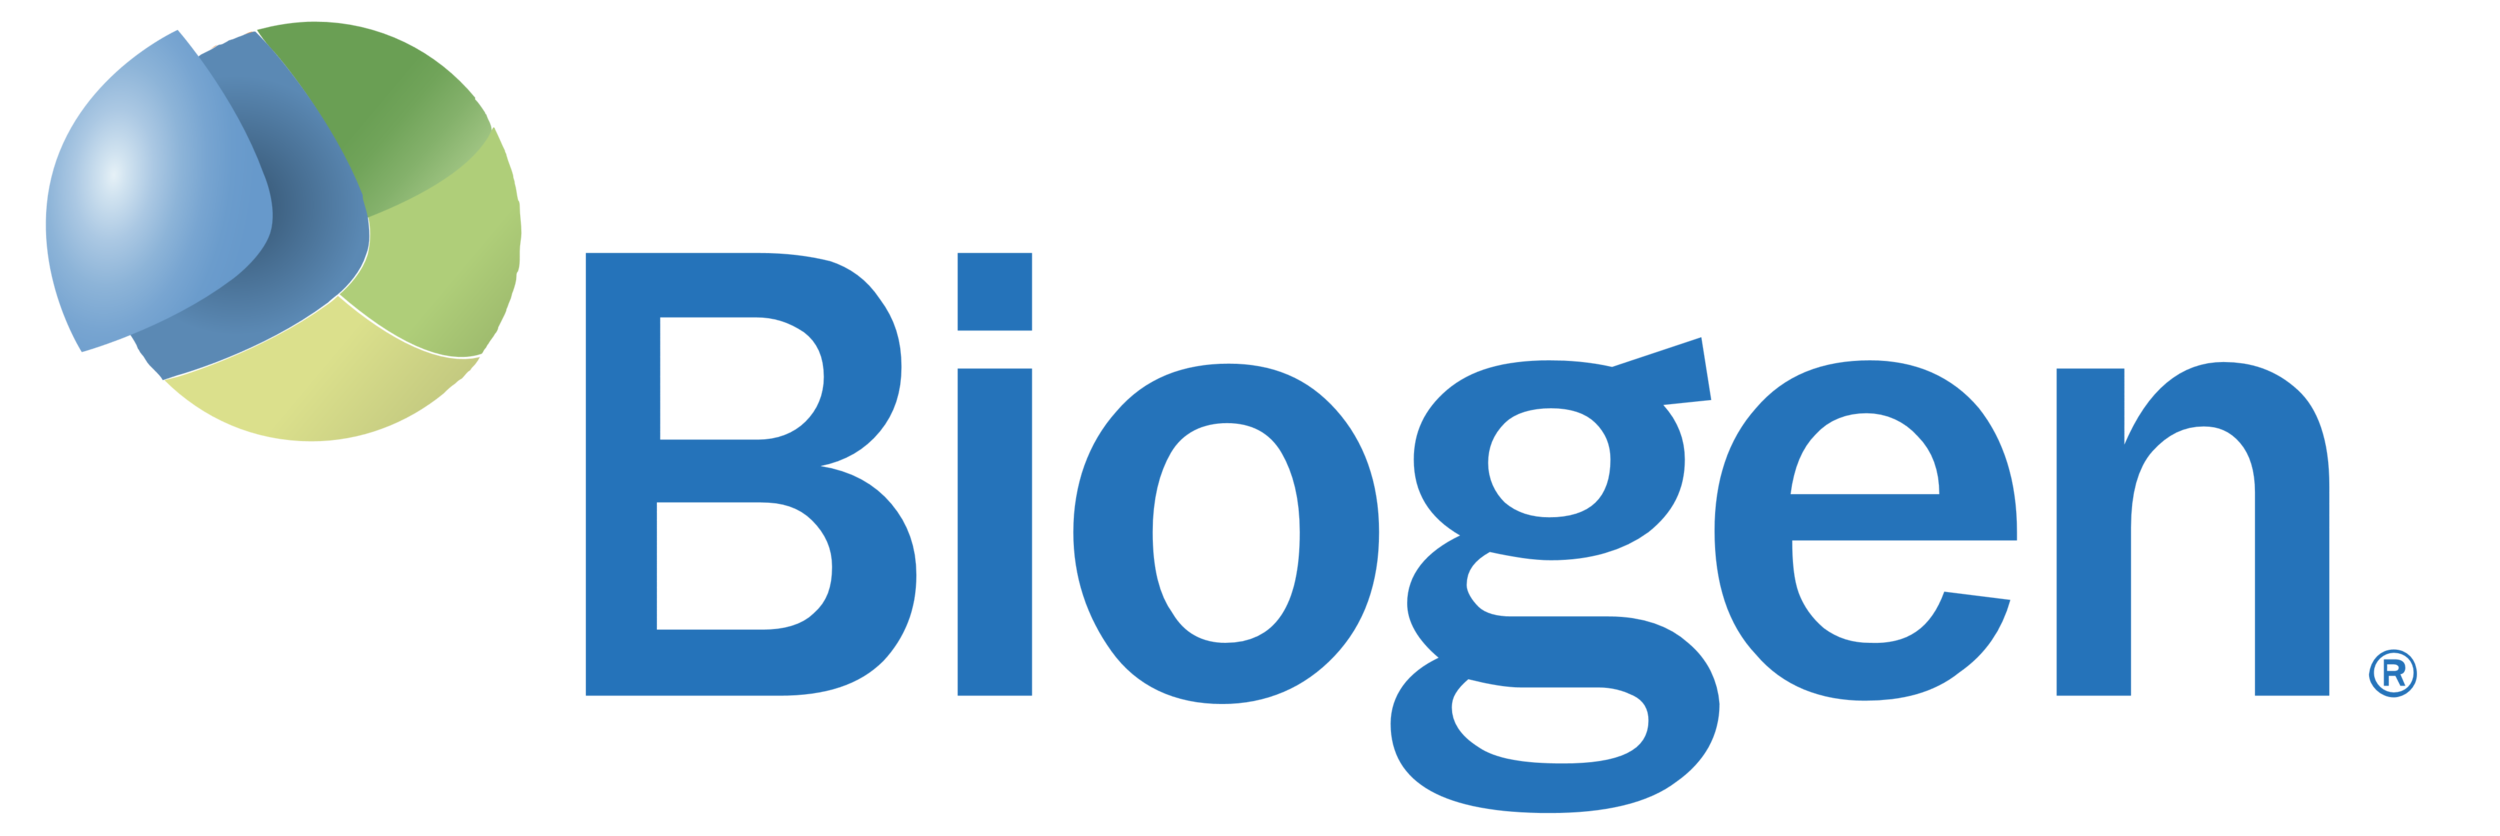 Biogen logo.png